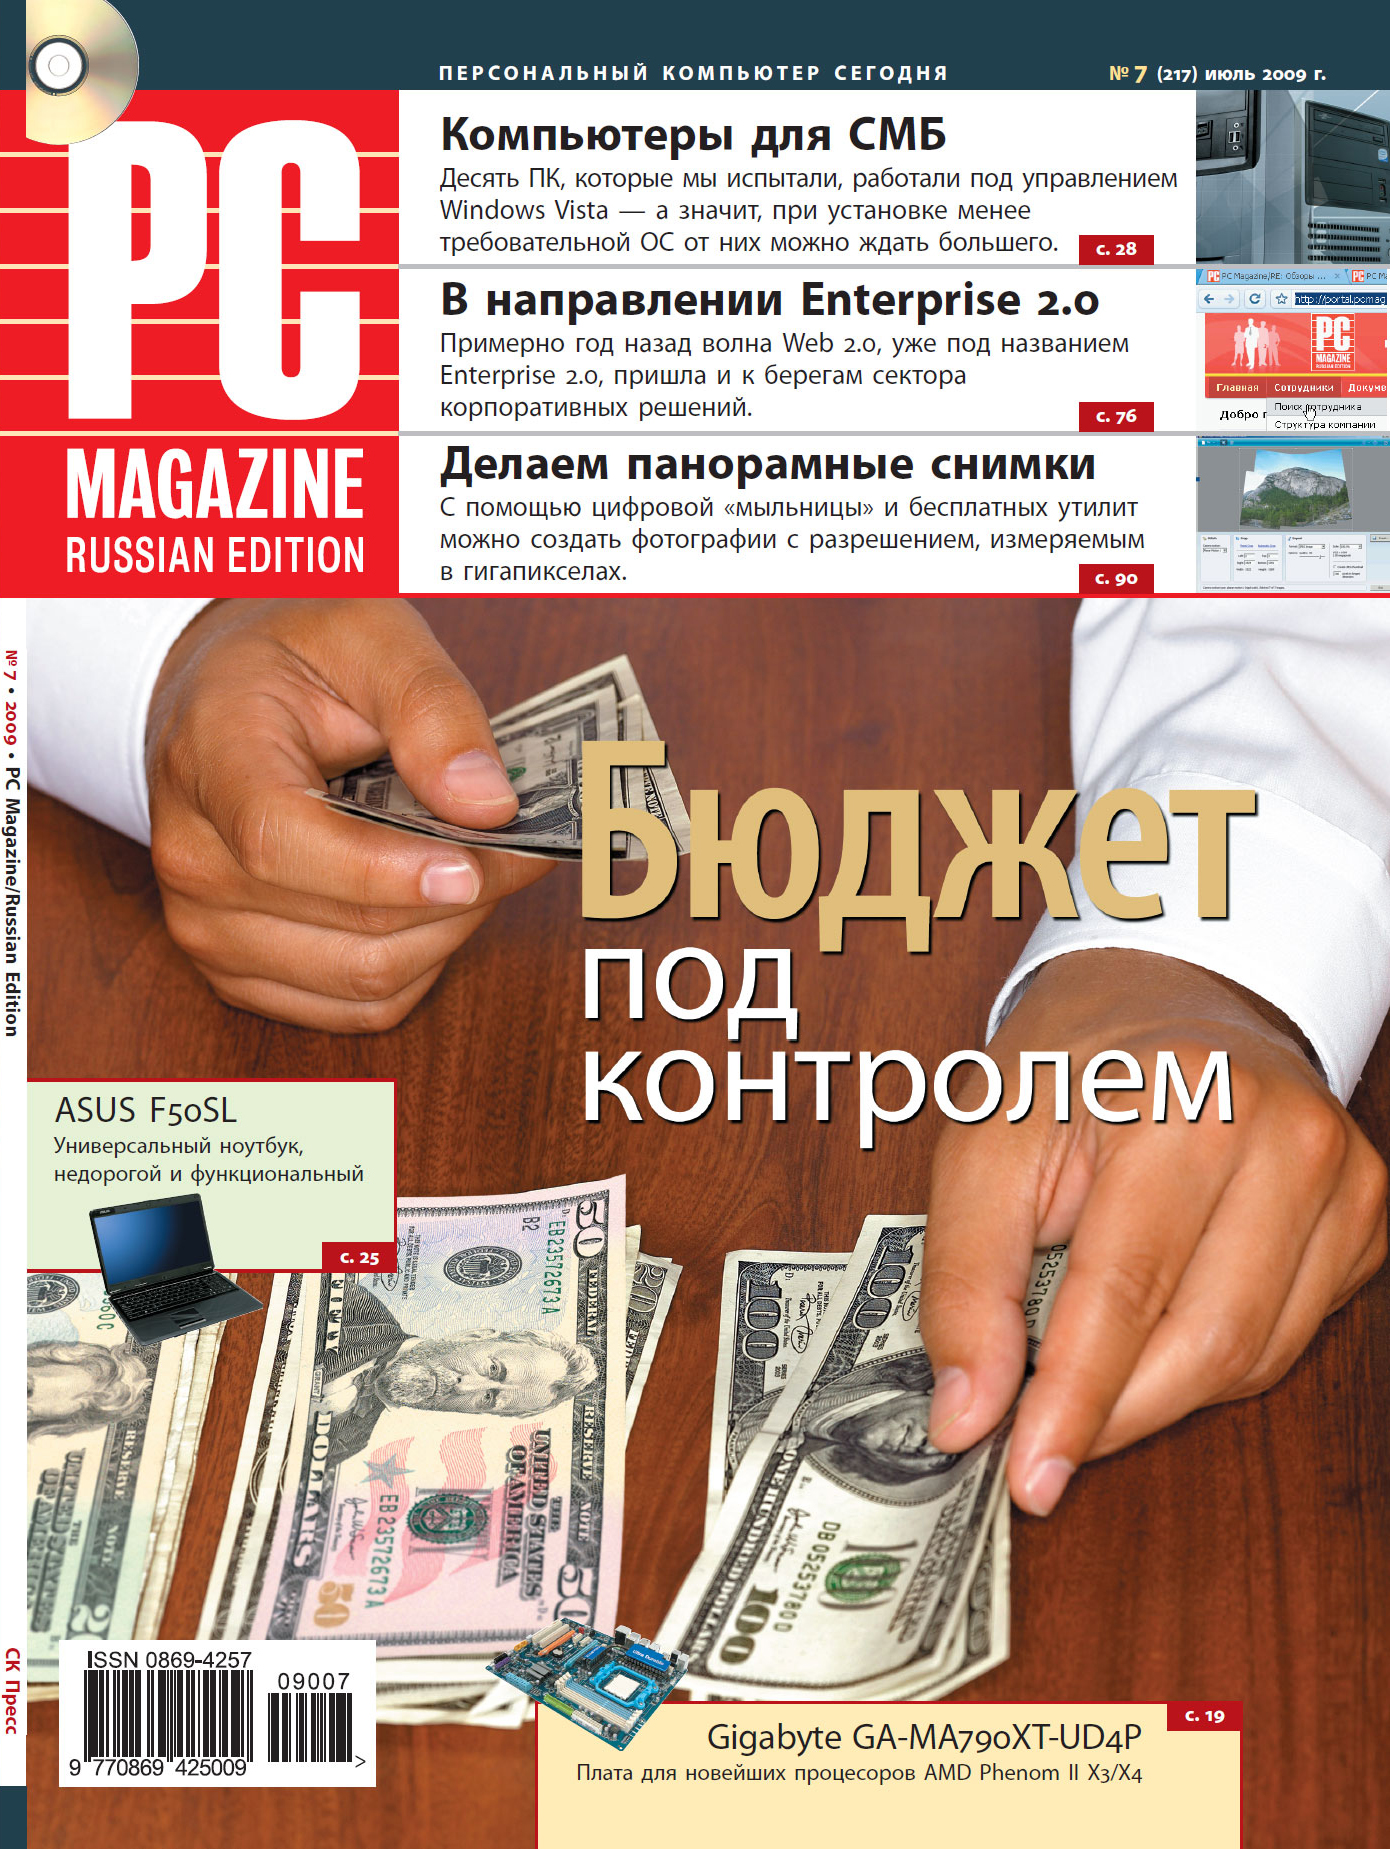 Журнал PC Magazine/RE №07/2009